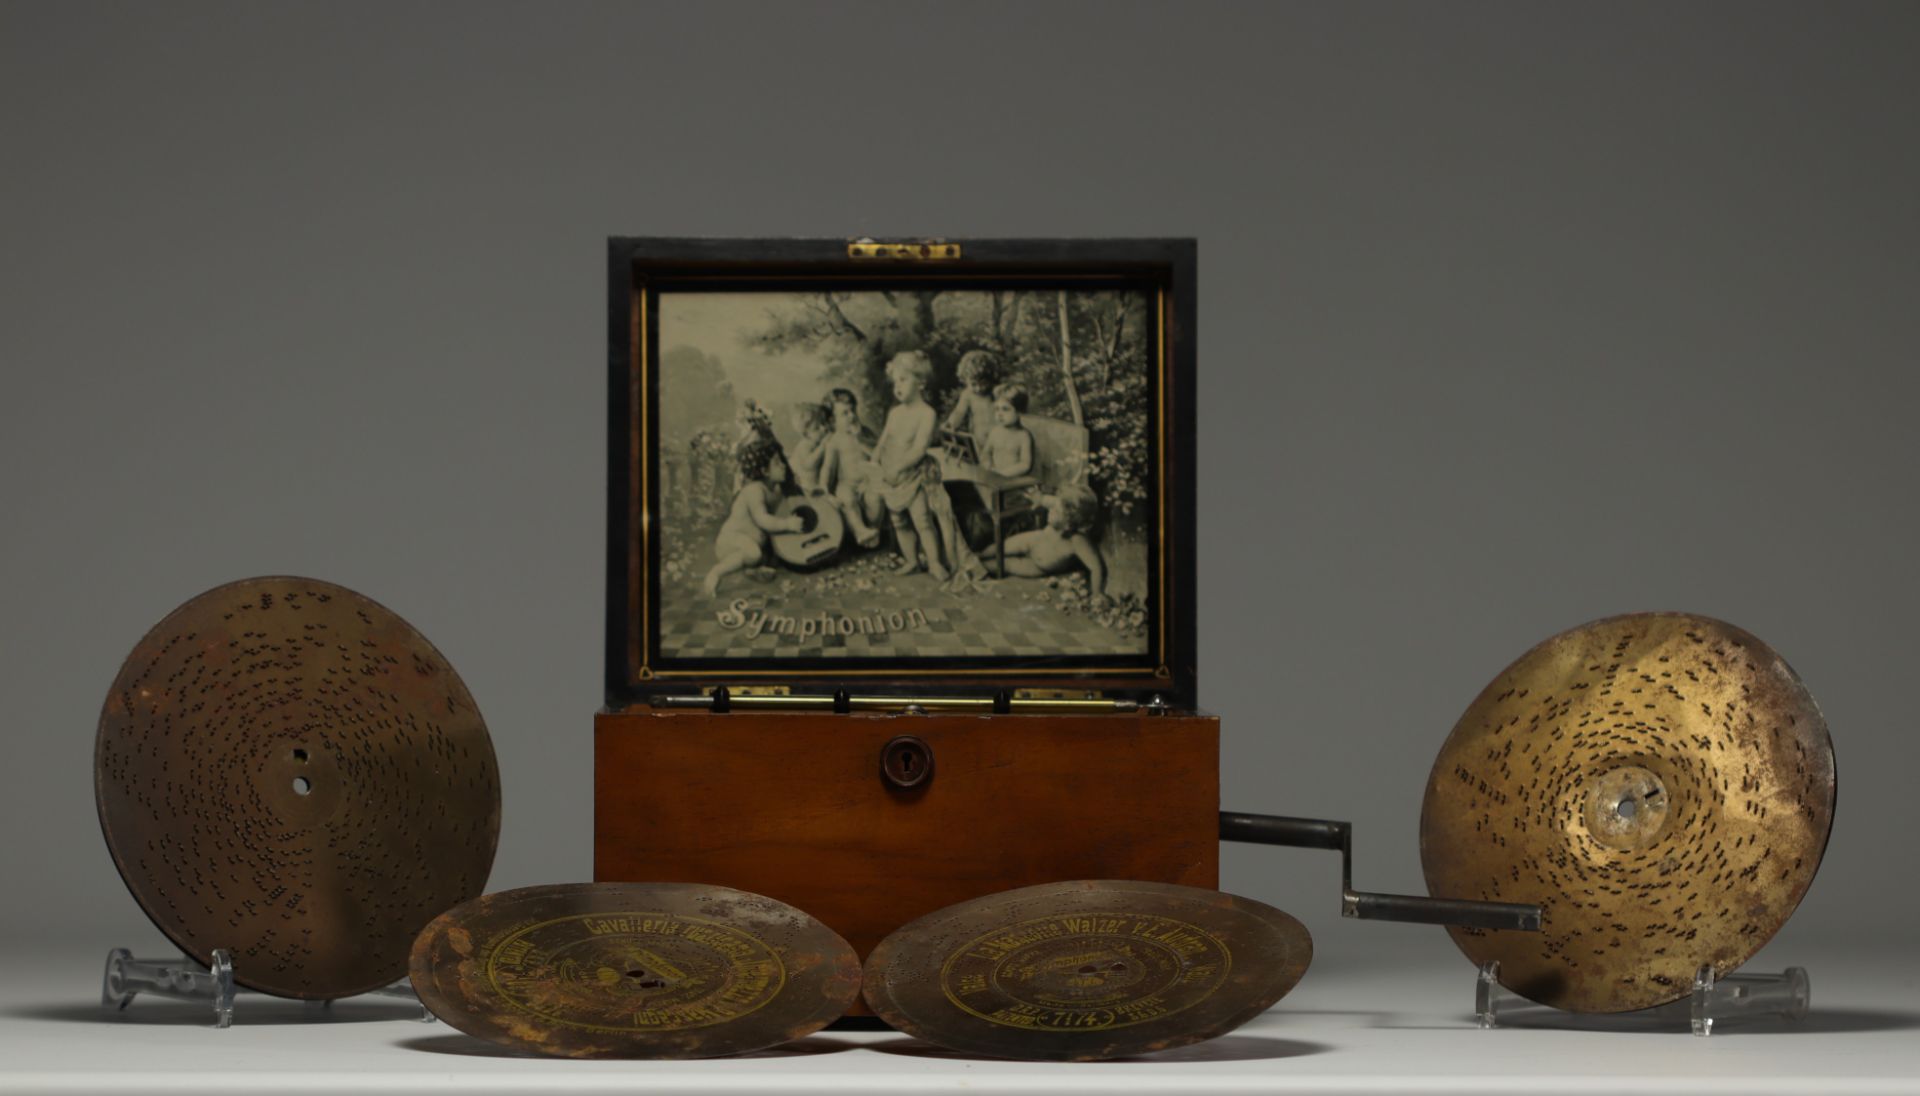 Symphonion - Walnut music box with four discs, circa 1900 - Image 2 of 4